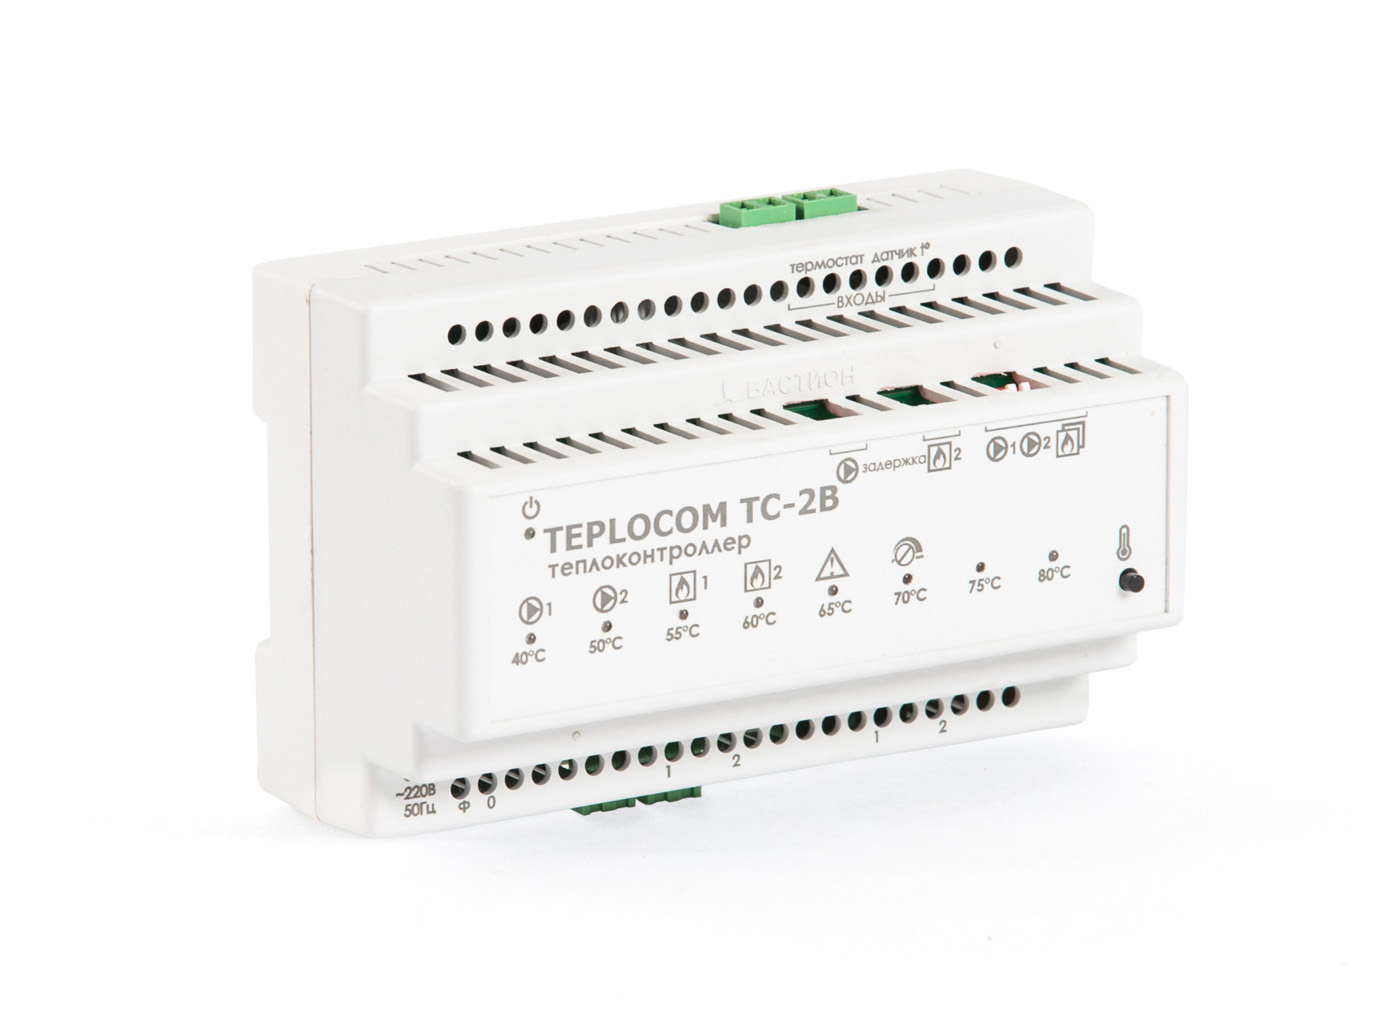 Теплоконтроллер для каскада котлов TEPLOCOM Каскад TC-2B